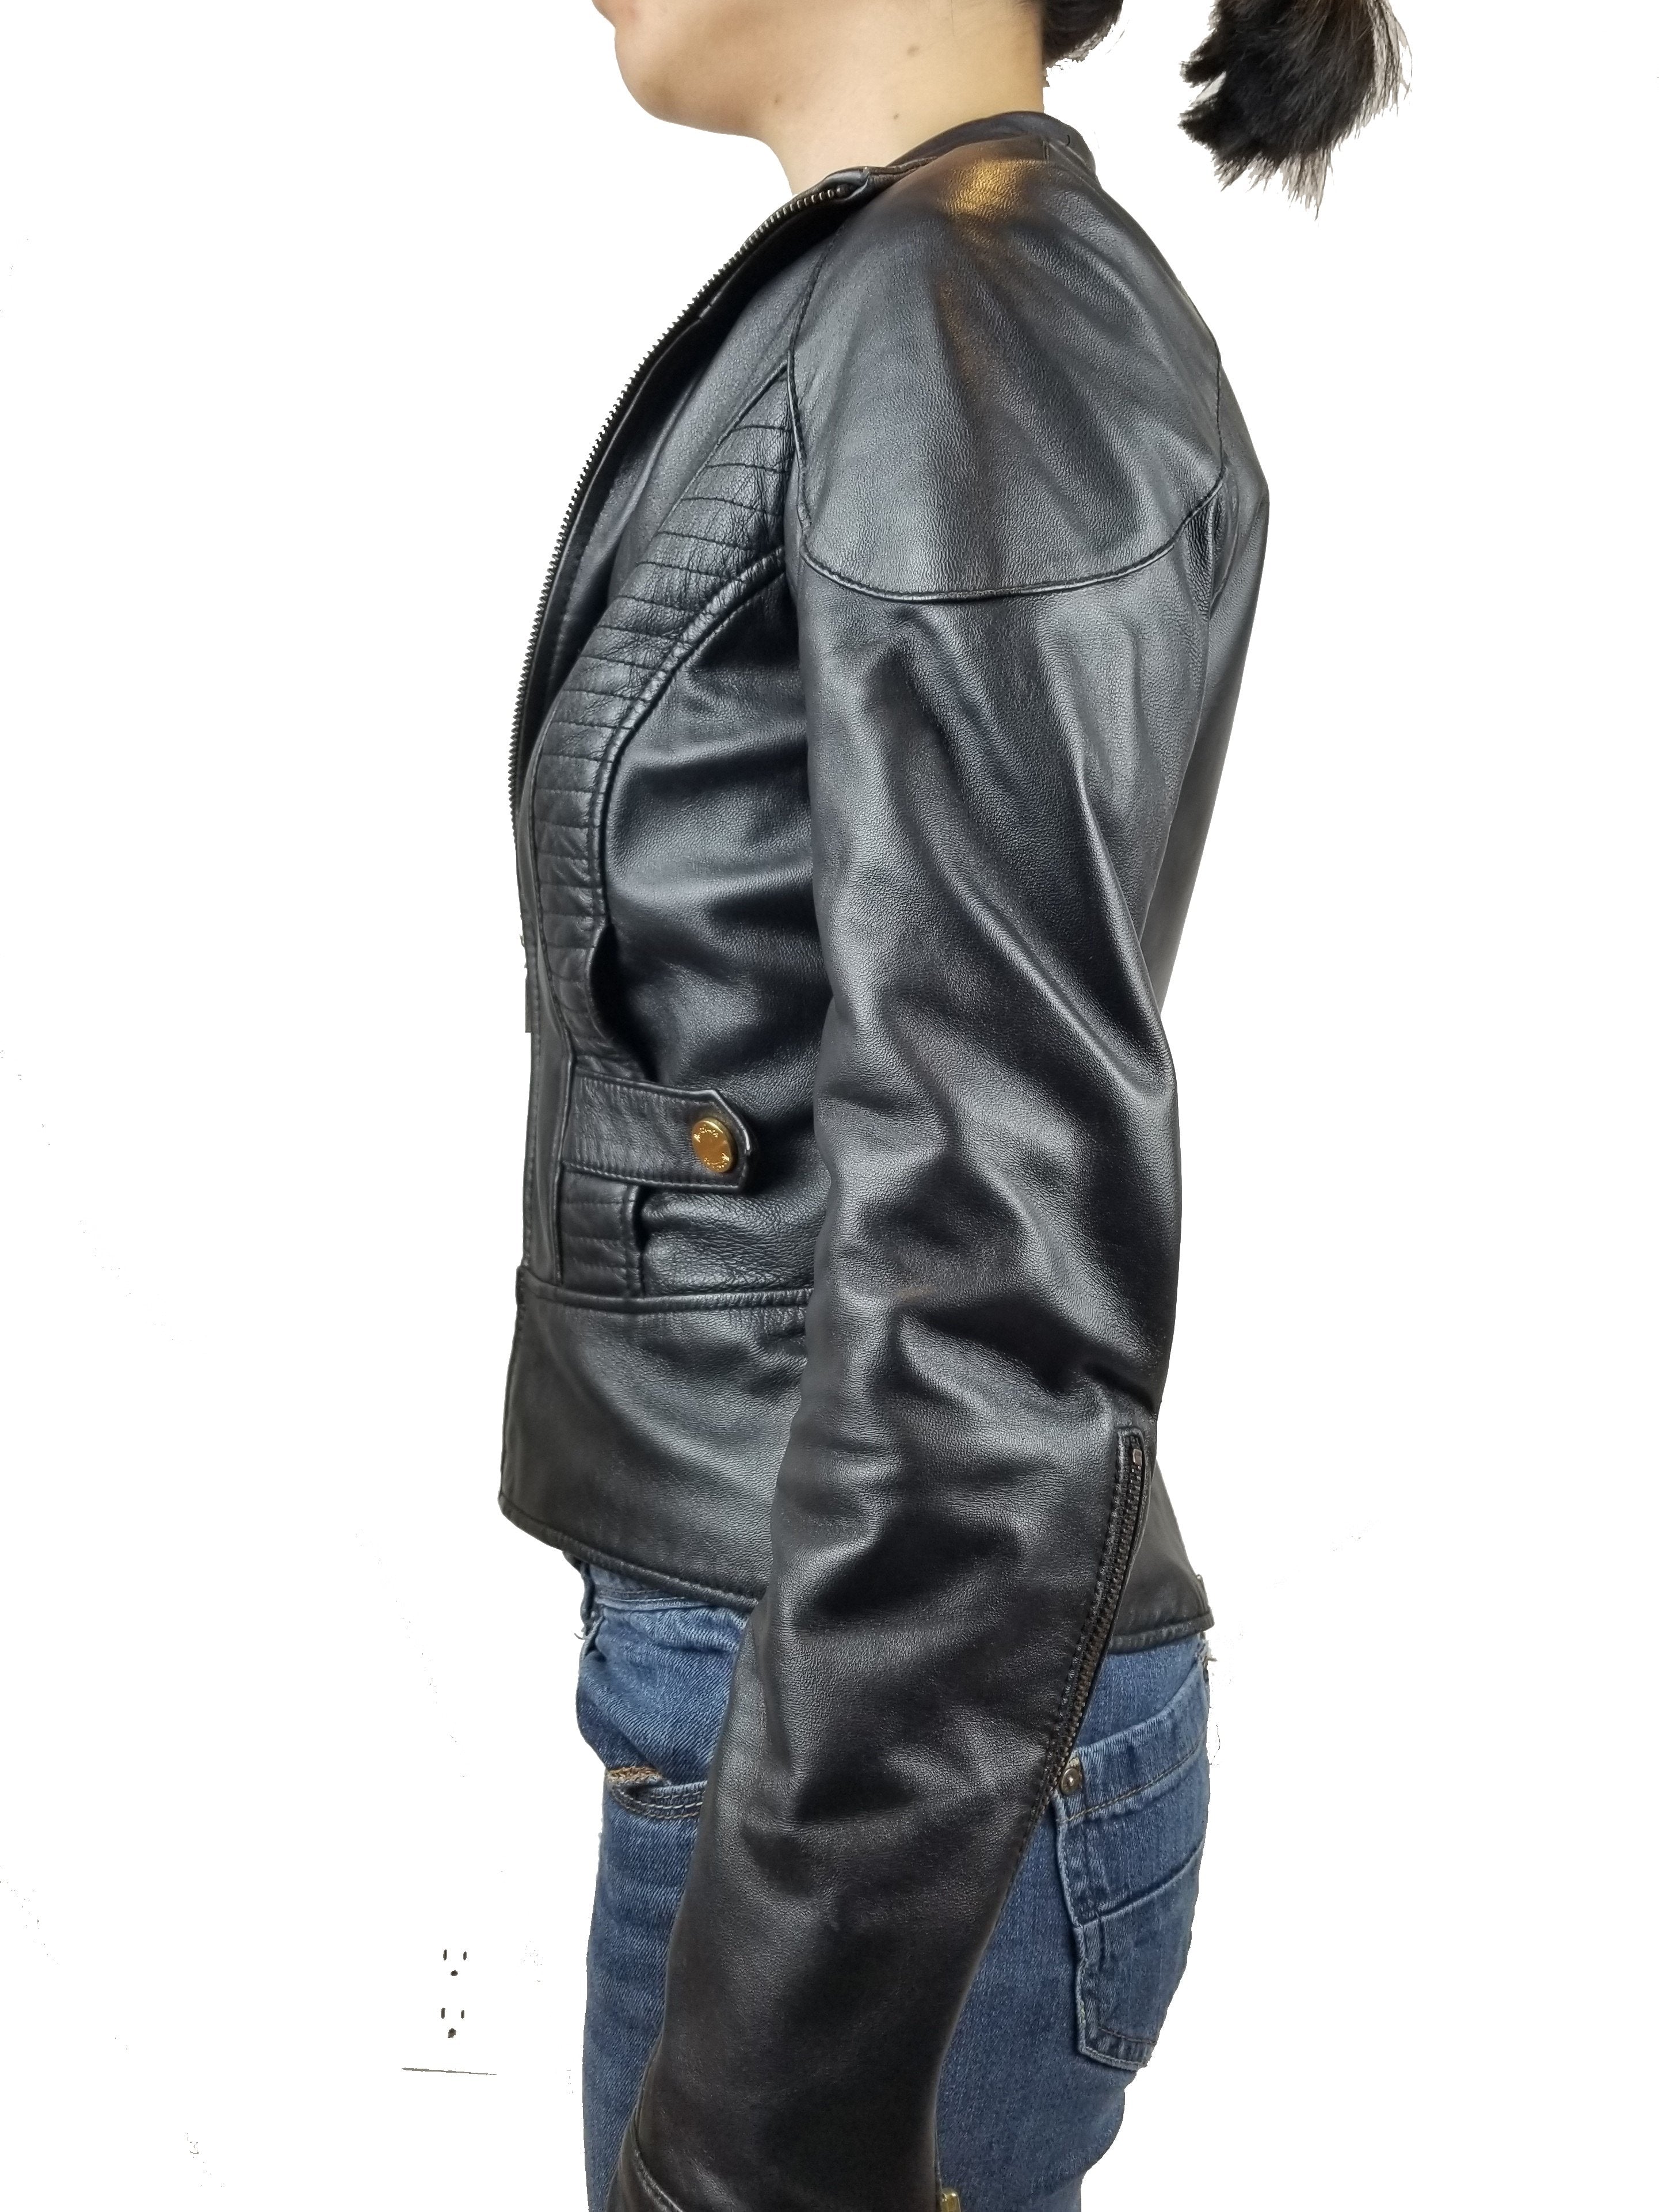 Marciano leather black jacket, Badass is the new feminine. Fits small. , Black, Shell: 100% Leather. Lining: 100% Polyester, jacket, women's leather black jacket, women's leather designer jacket, fashion